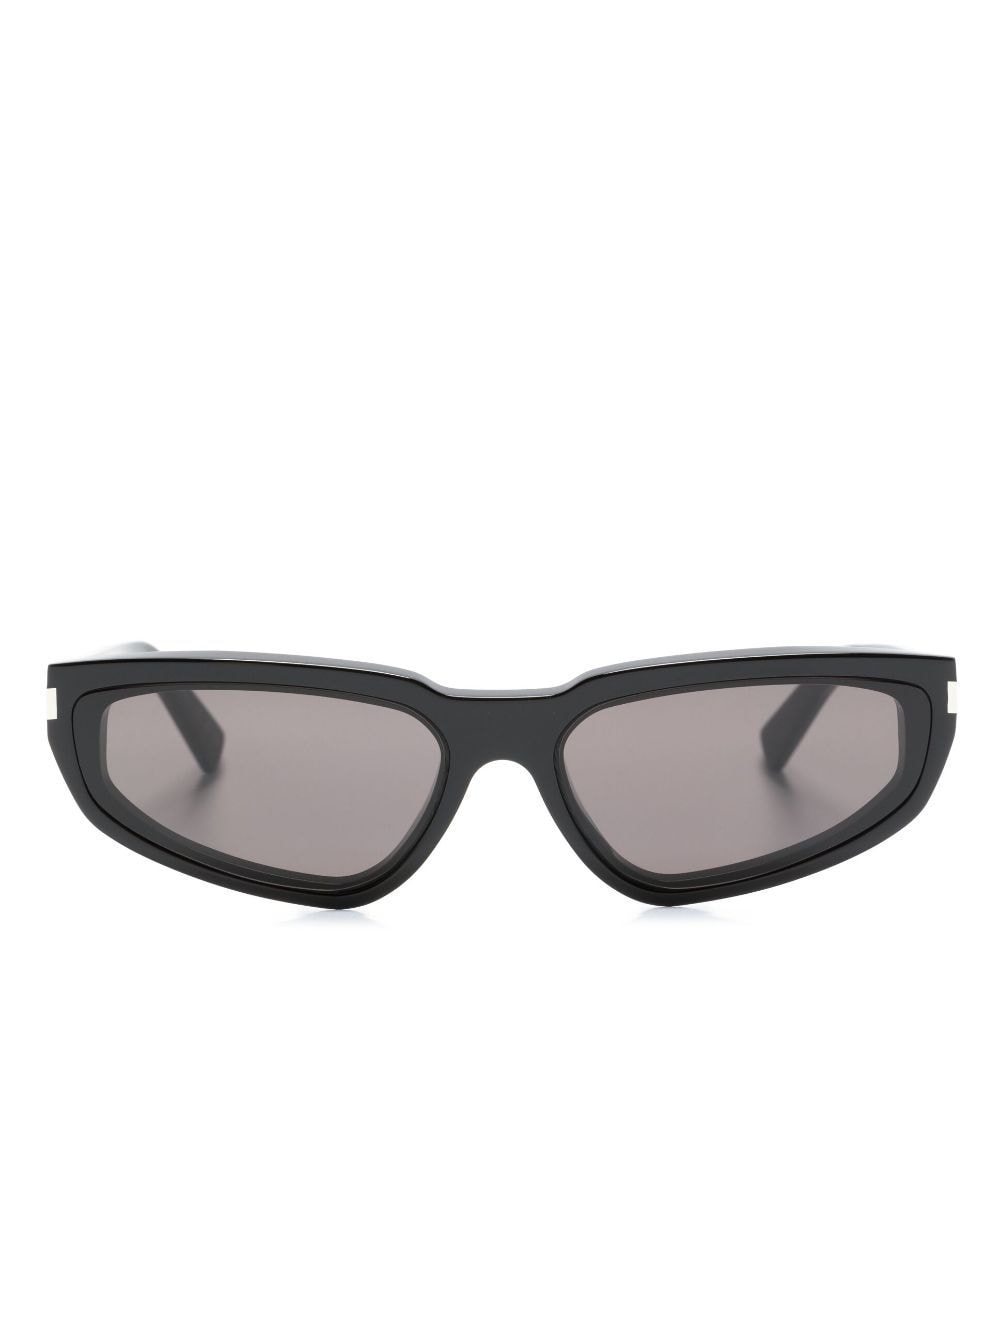 Saint Laurent Eyewear SL 634 Nova cat-eye sunglasses - Black von Saint Laurent Eyewear